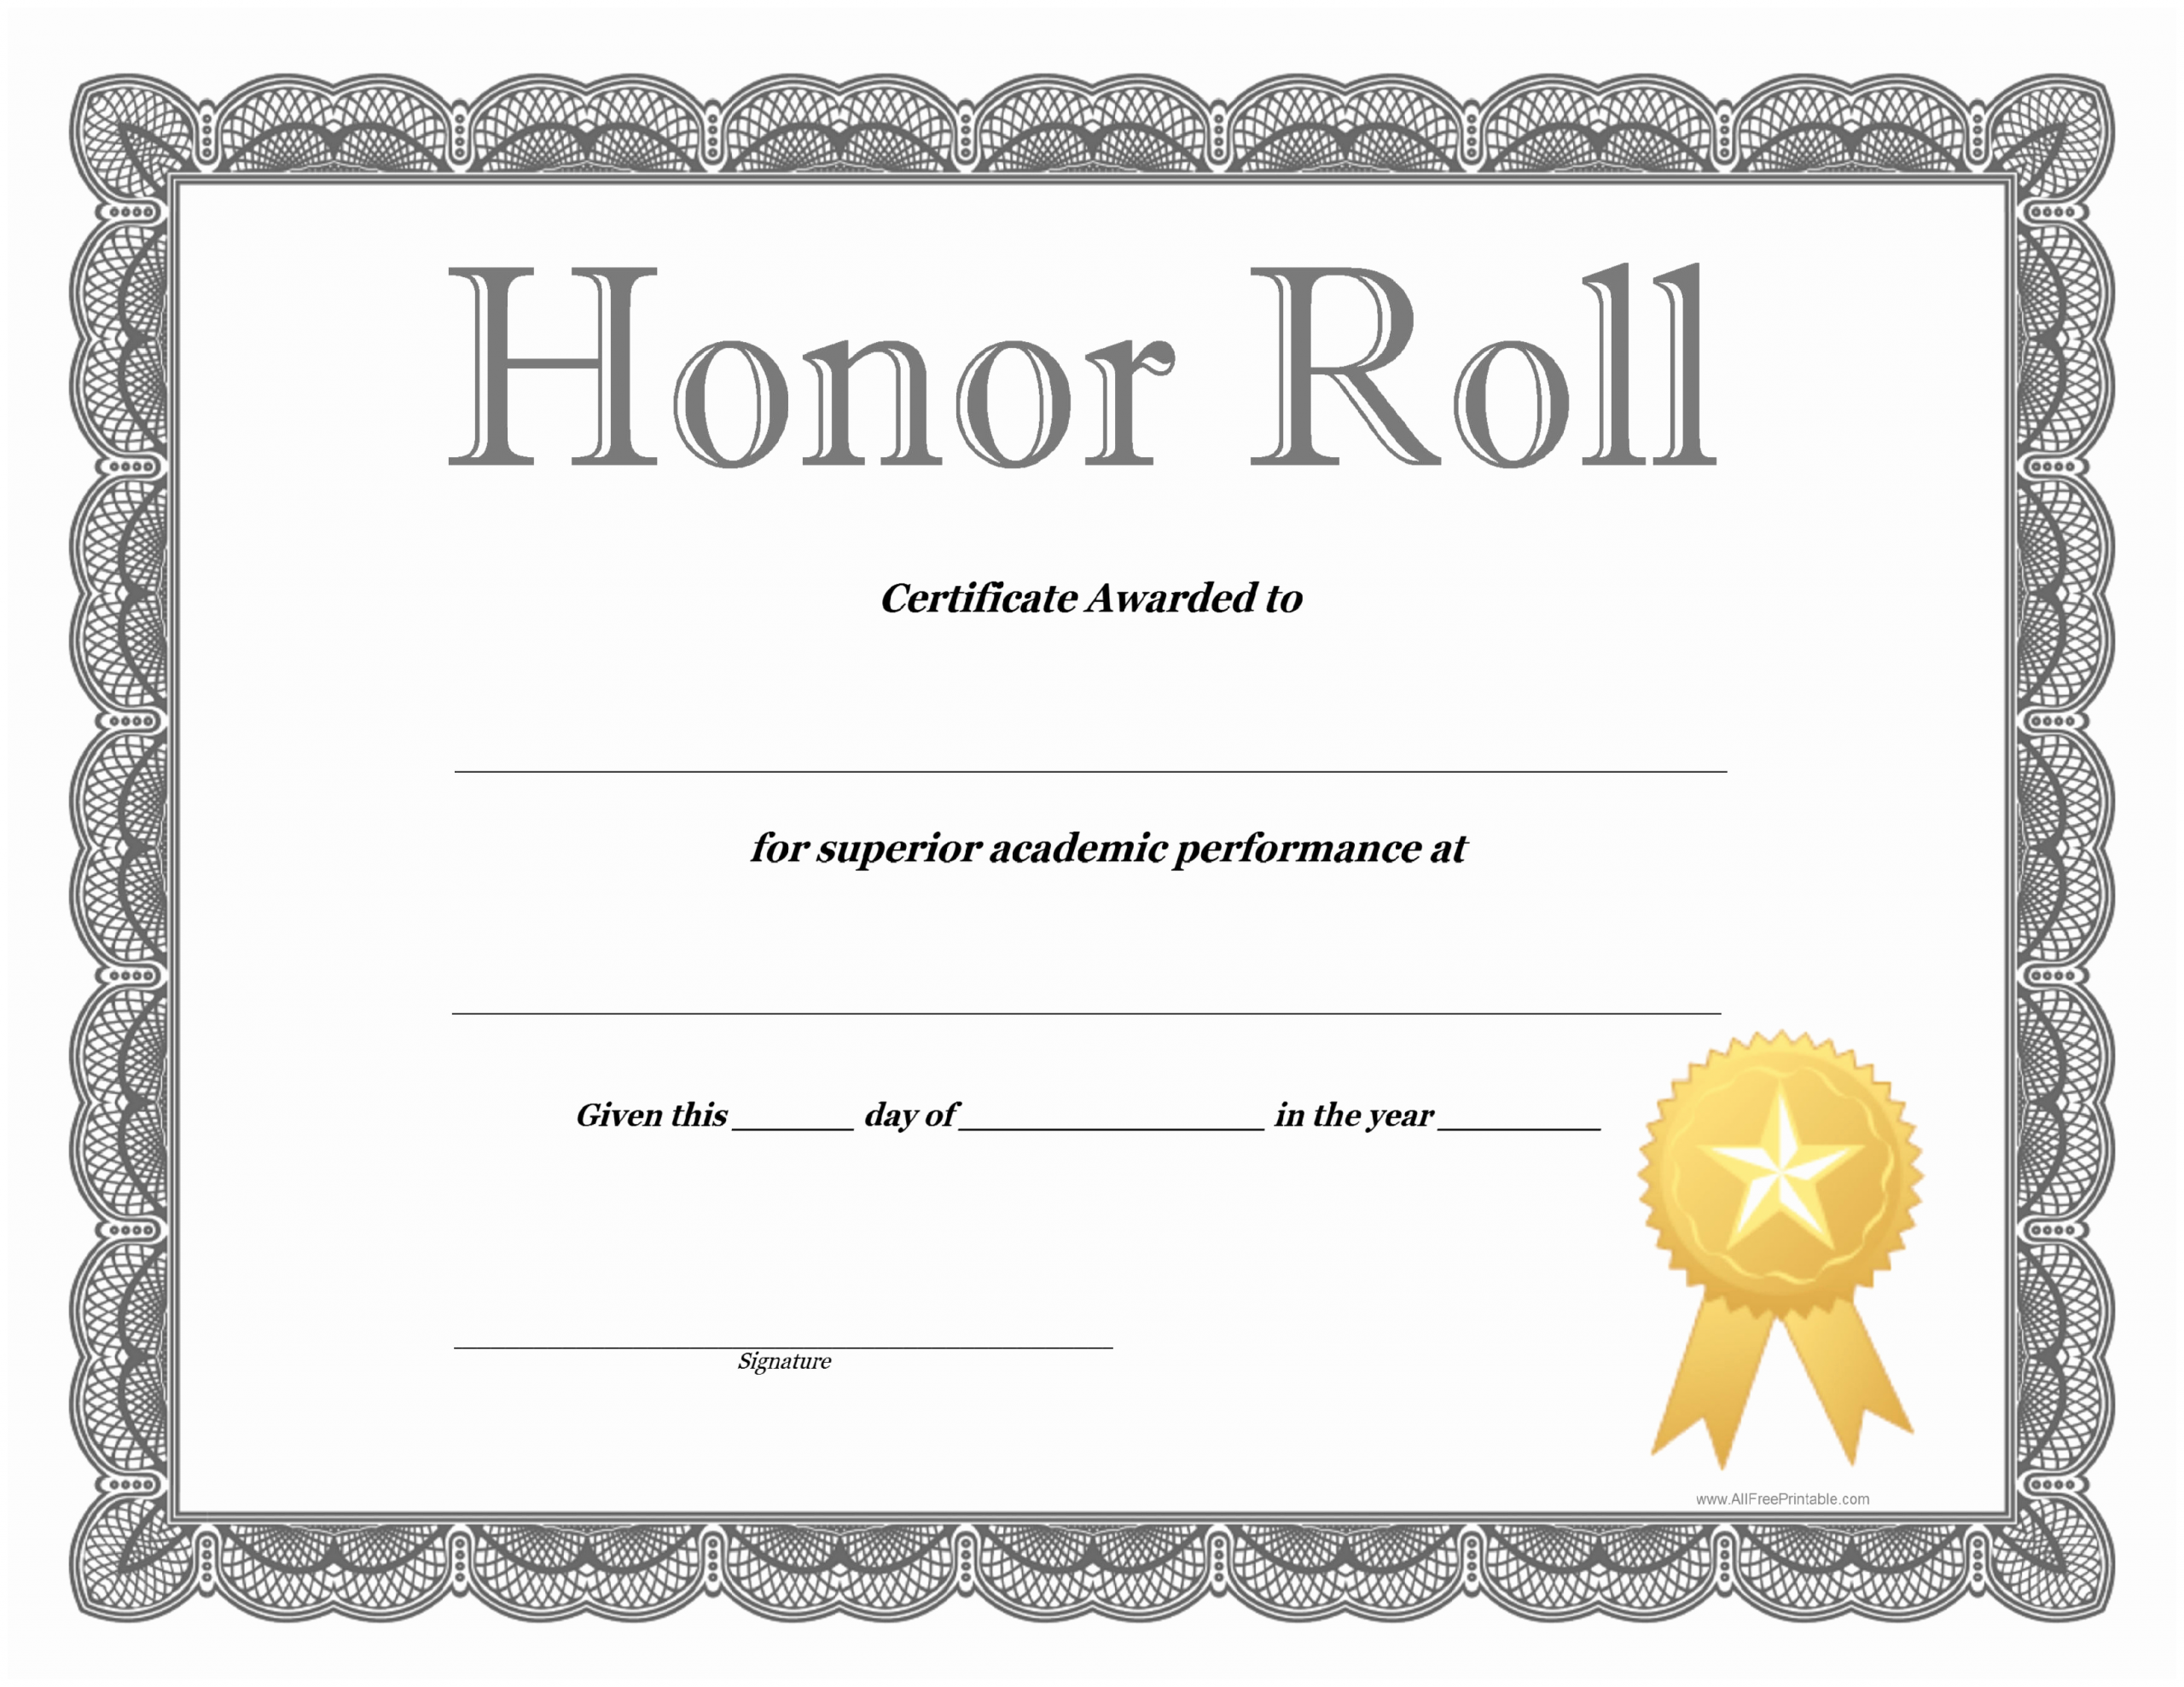 Honor Roll Certificate Template Beautiful Honor Roll Certificate Template How to Craft A